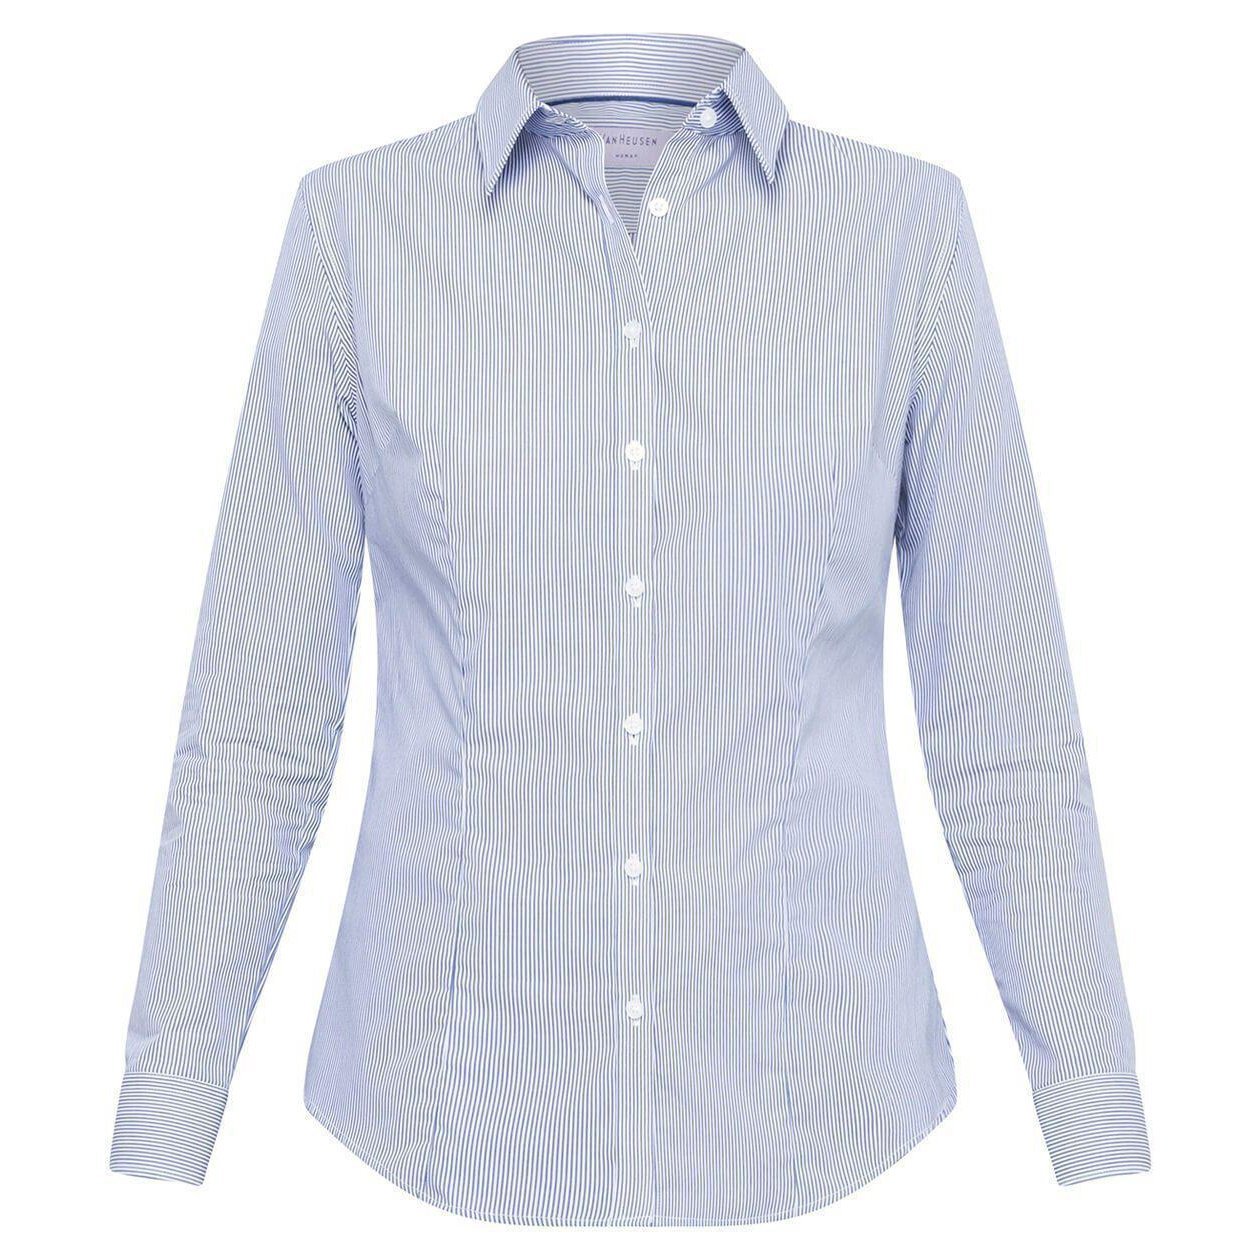 Buy Van Heusen Womens European Tailored Fit Shirt - AWLB501 Online